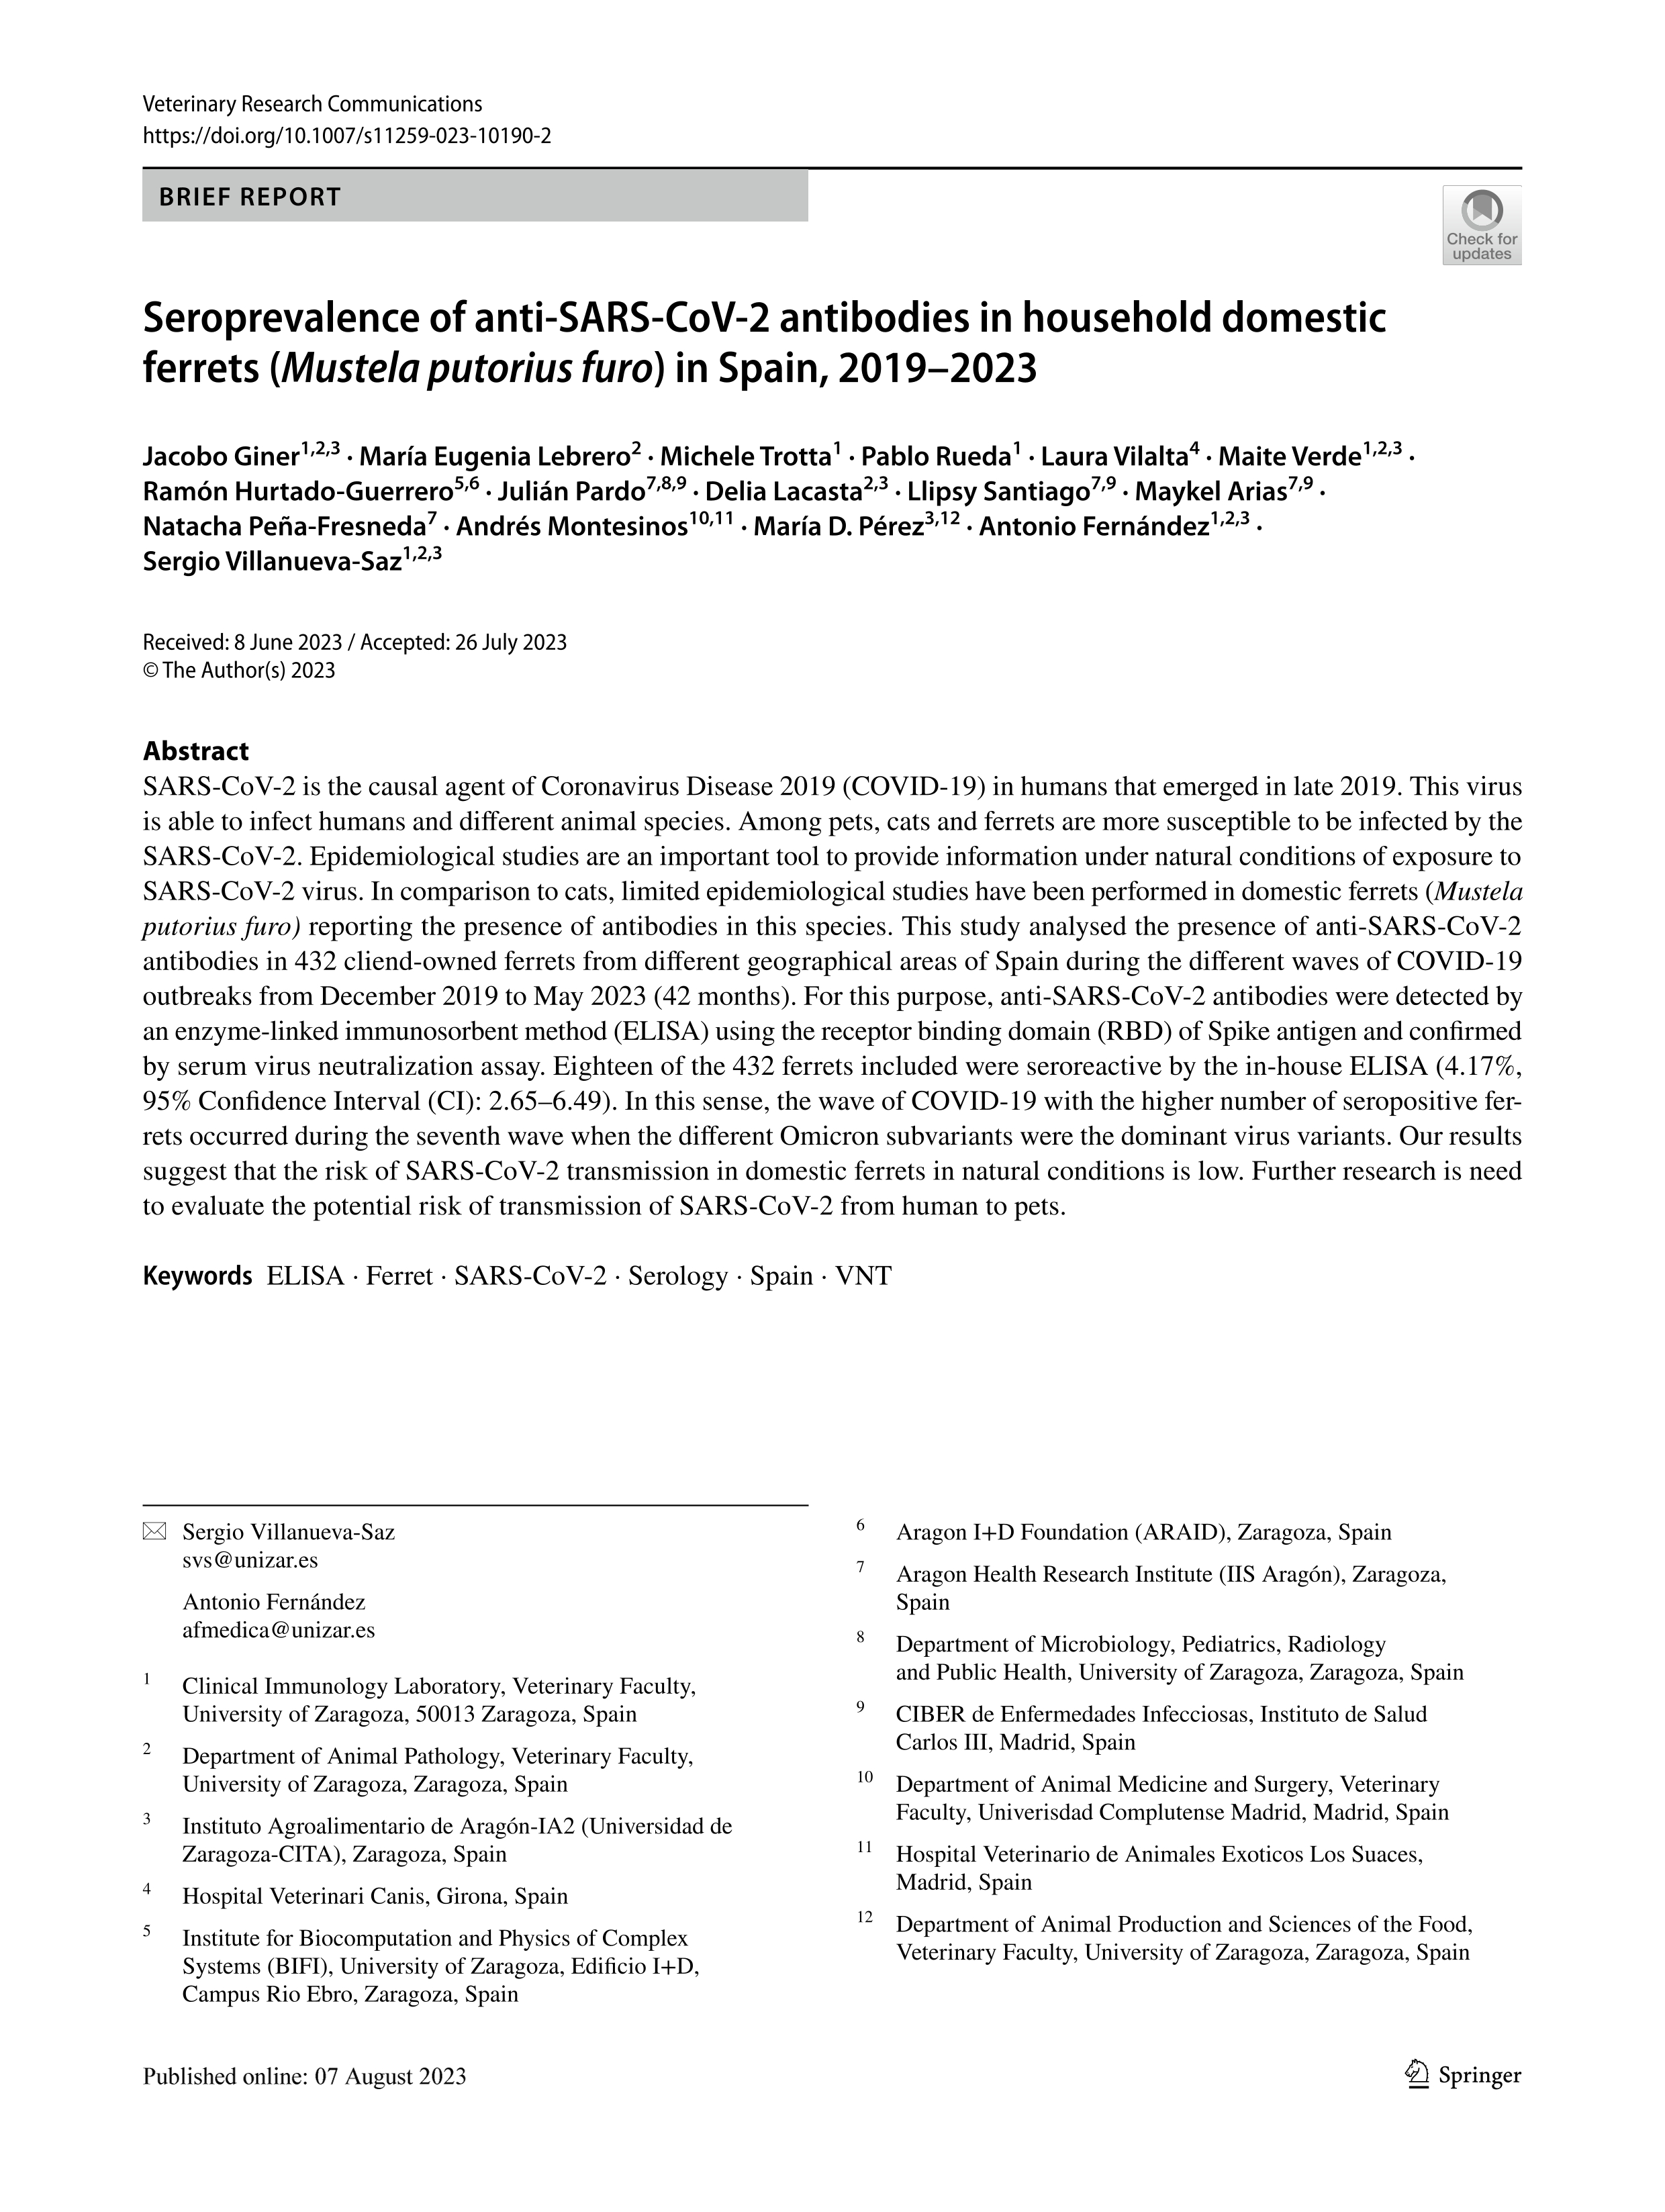 Seroprevalence of anti-SARS-CoV-2 antibodies in household domestic ferrets (Mustela putorius furo) in Spain, 2019–2023